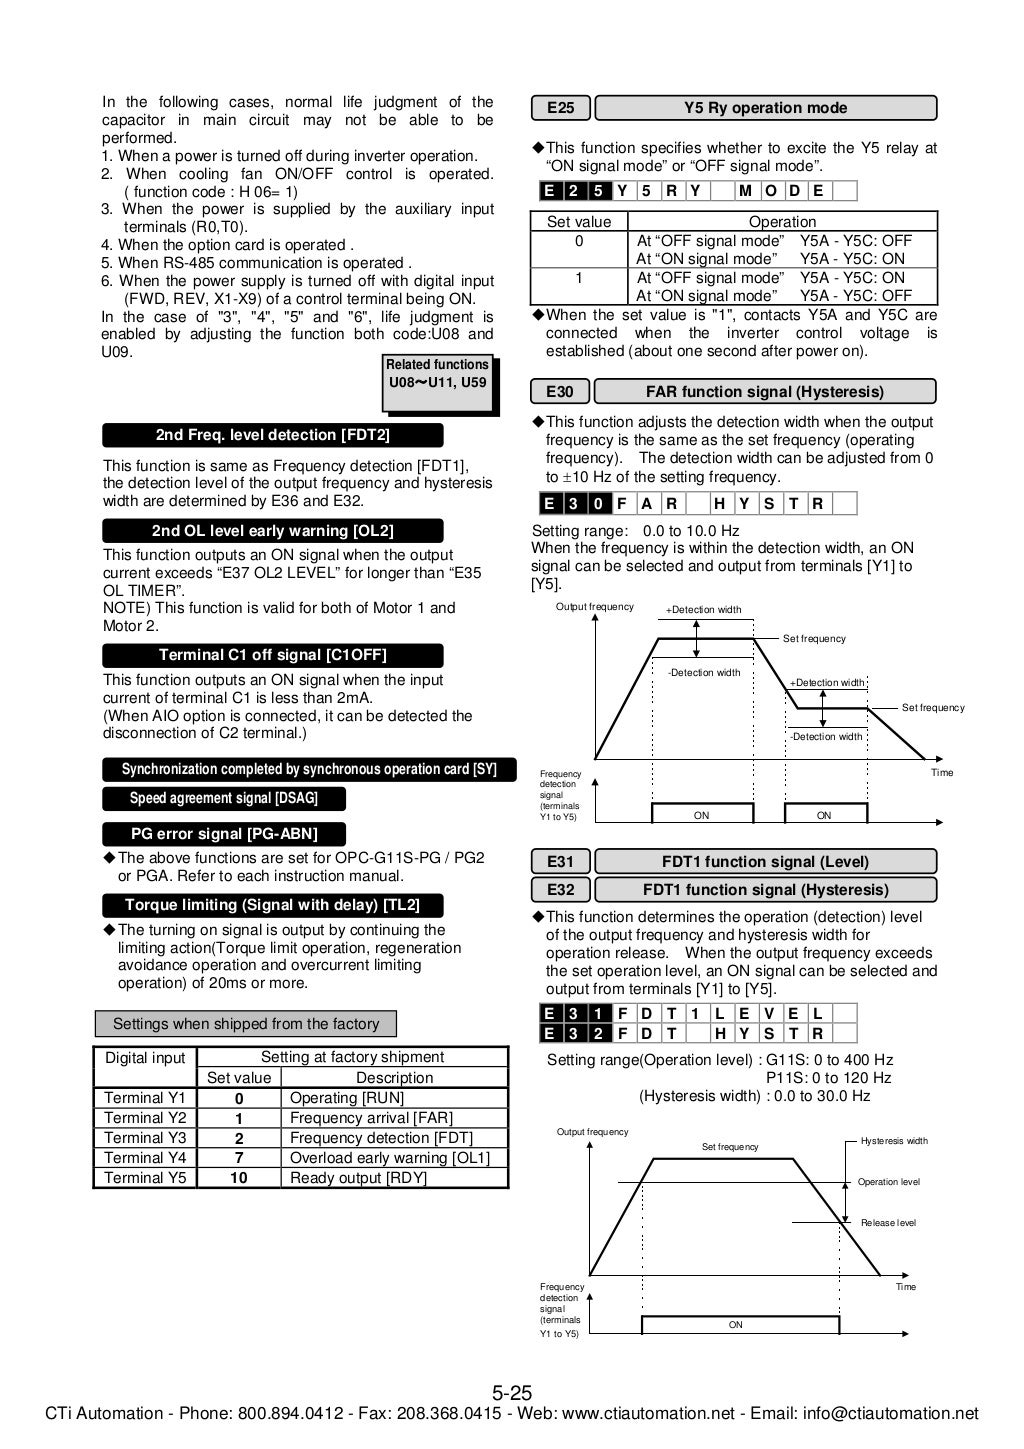 Fuji frenic-5000 g11s-p11s-user-manual